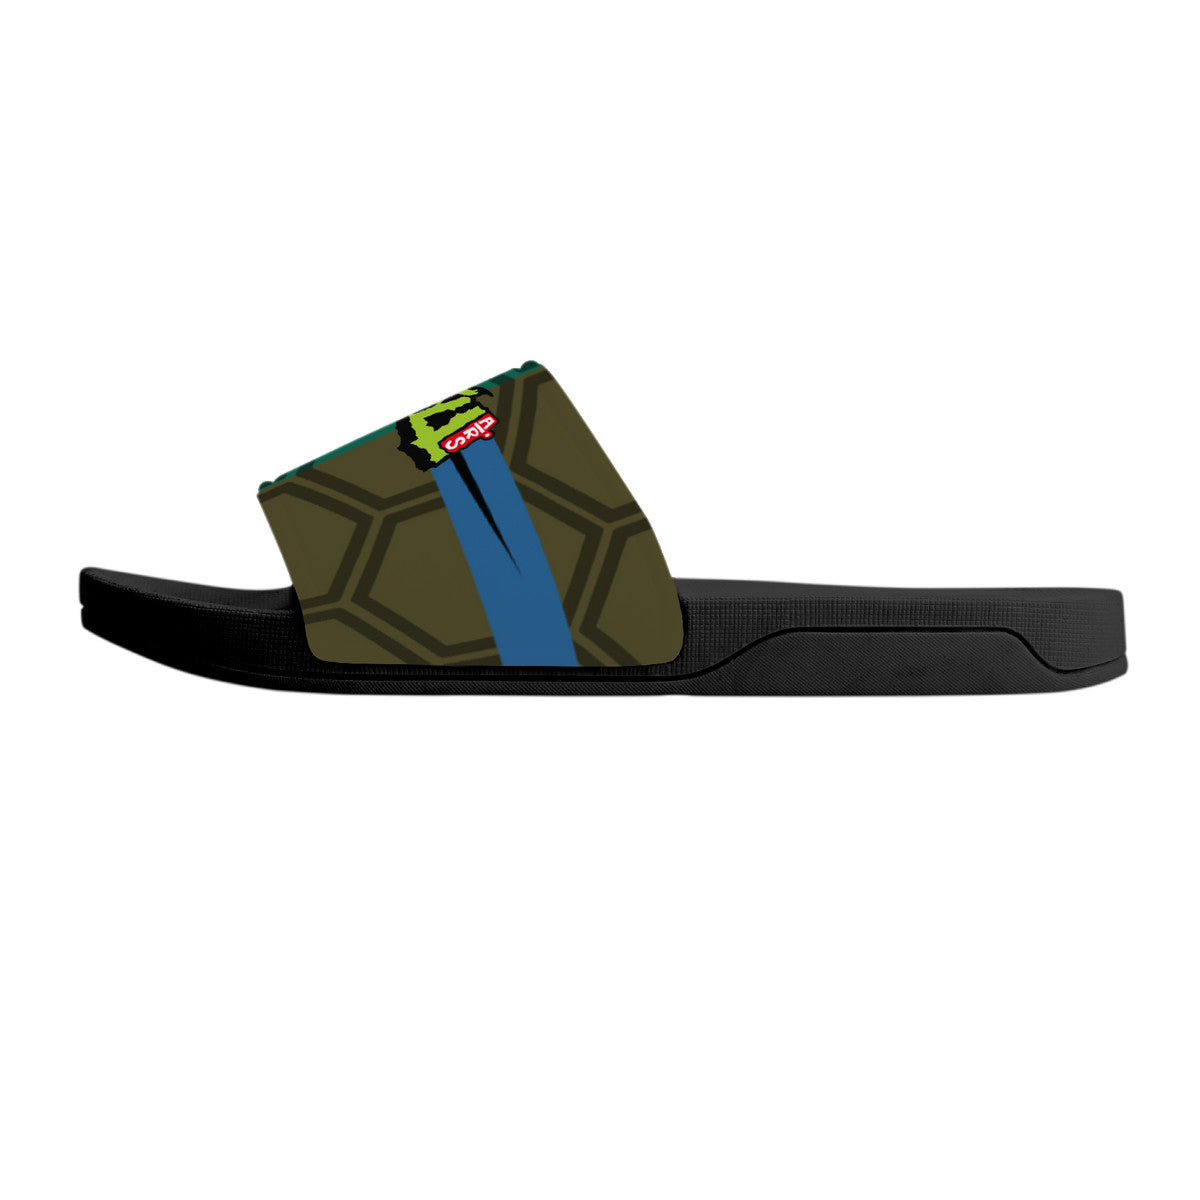 Bull Airs - Sewer Slides | Custom Branded Company Slides | Shoe Zero